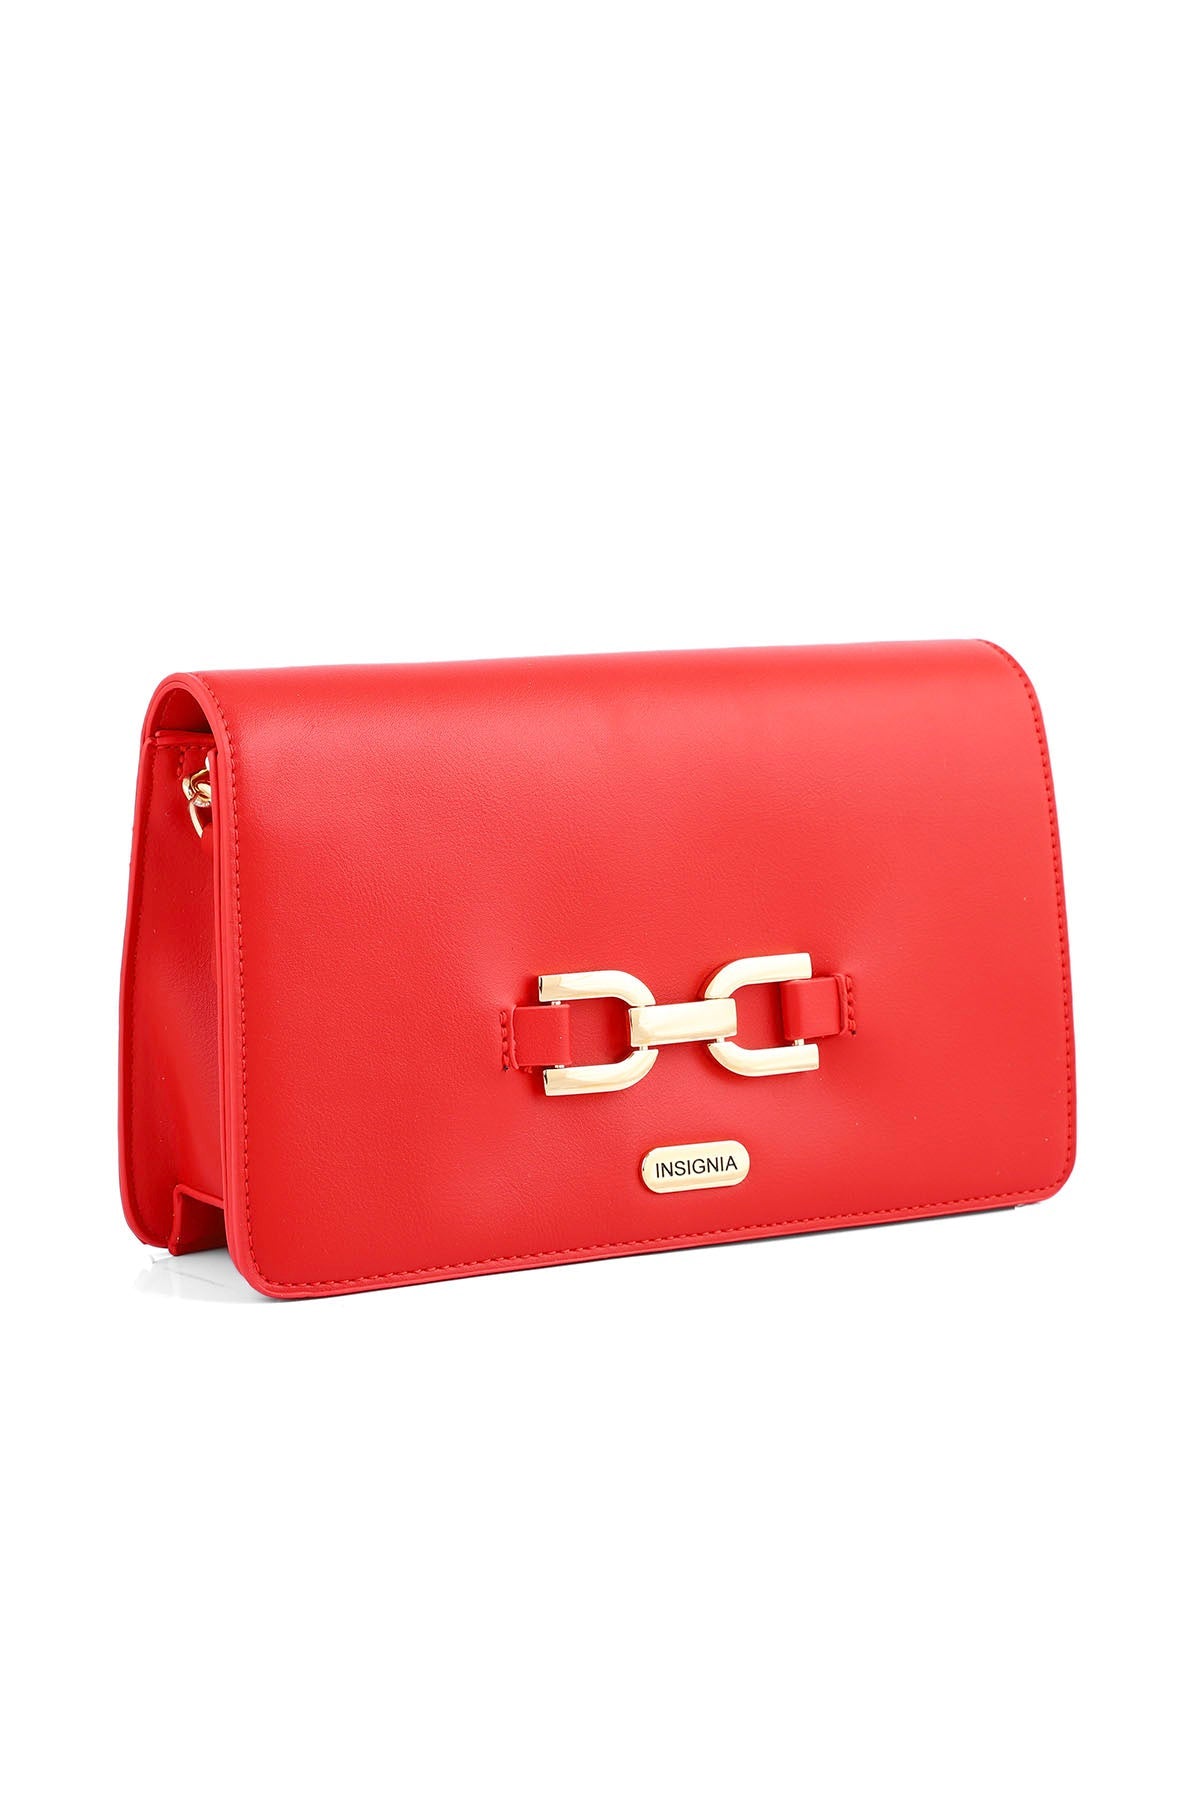 Cross Shoulder Bags B15015-Red